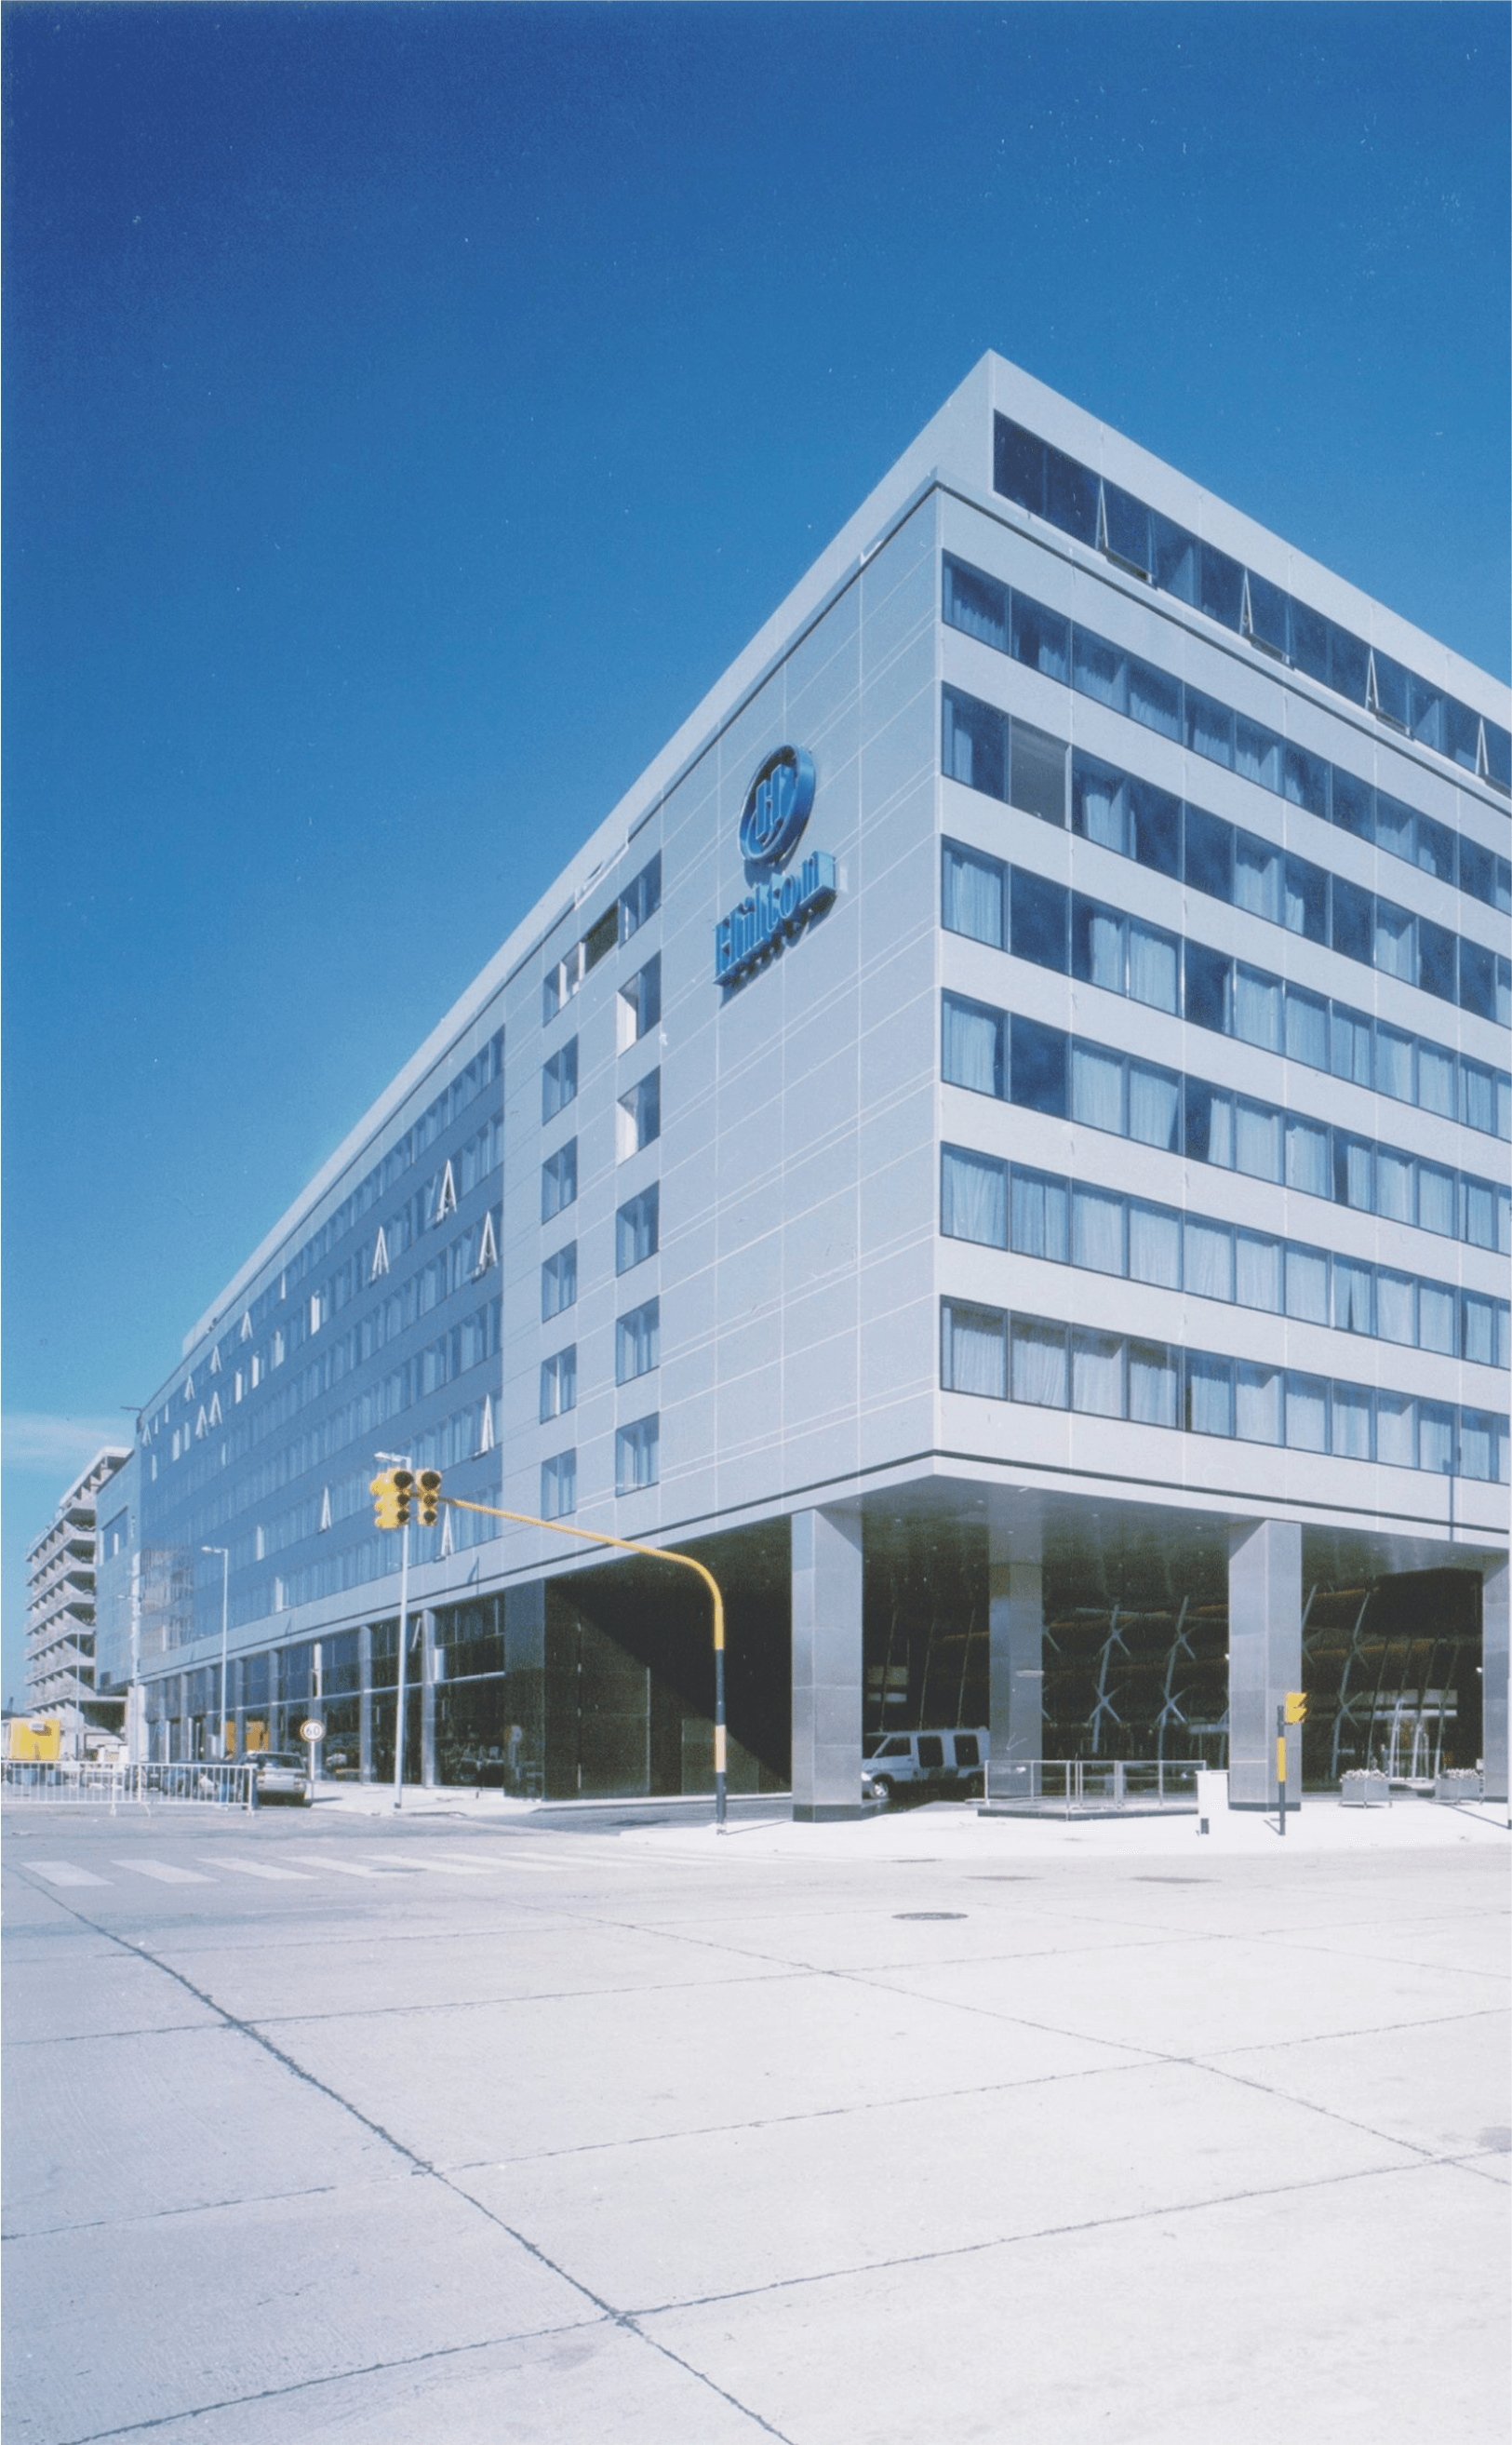 Un edificio grande con un logo azul al costado.